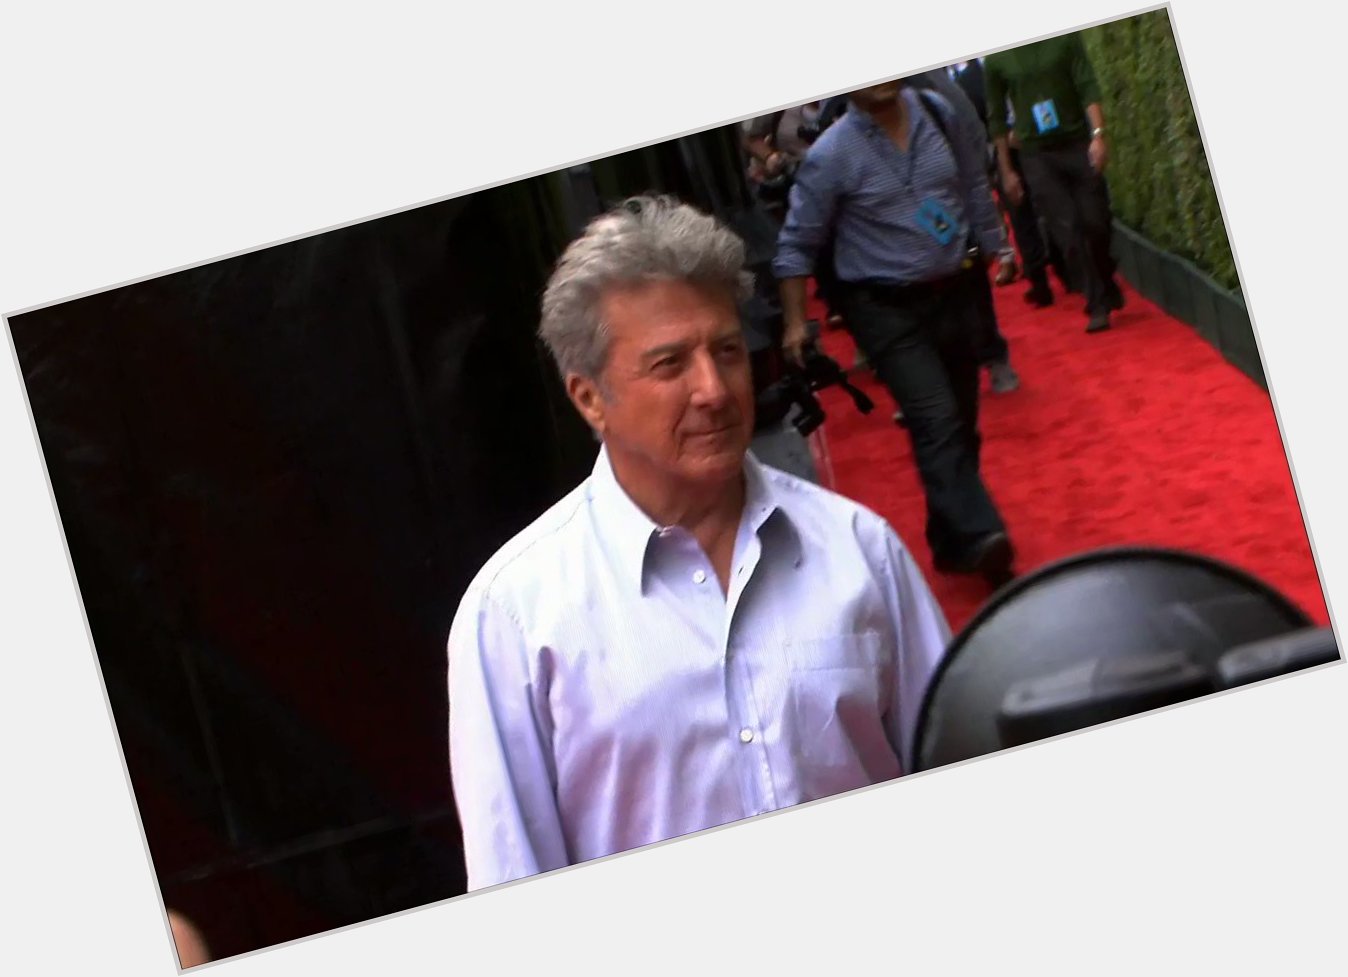 Wishing a Happy 83rd Birthday to Dustin Hoffman! 